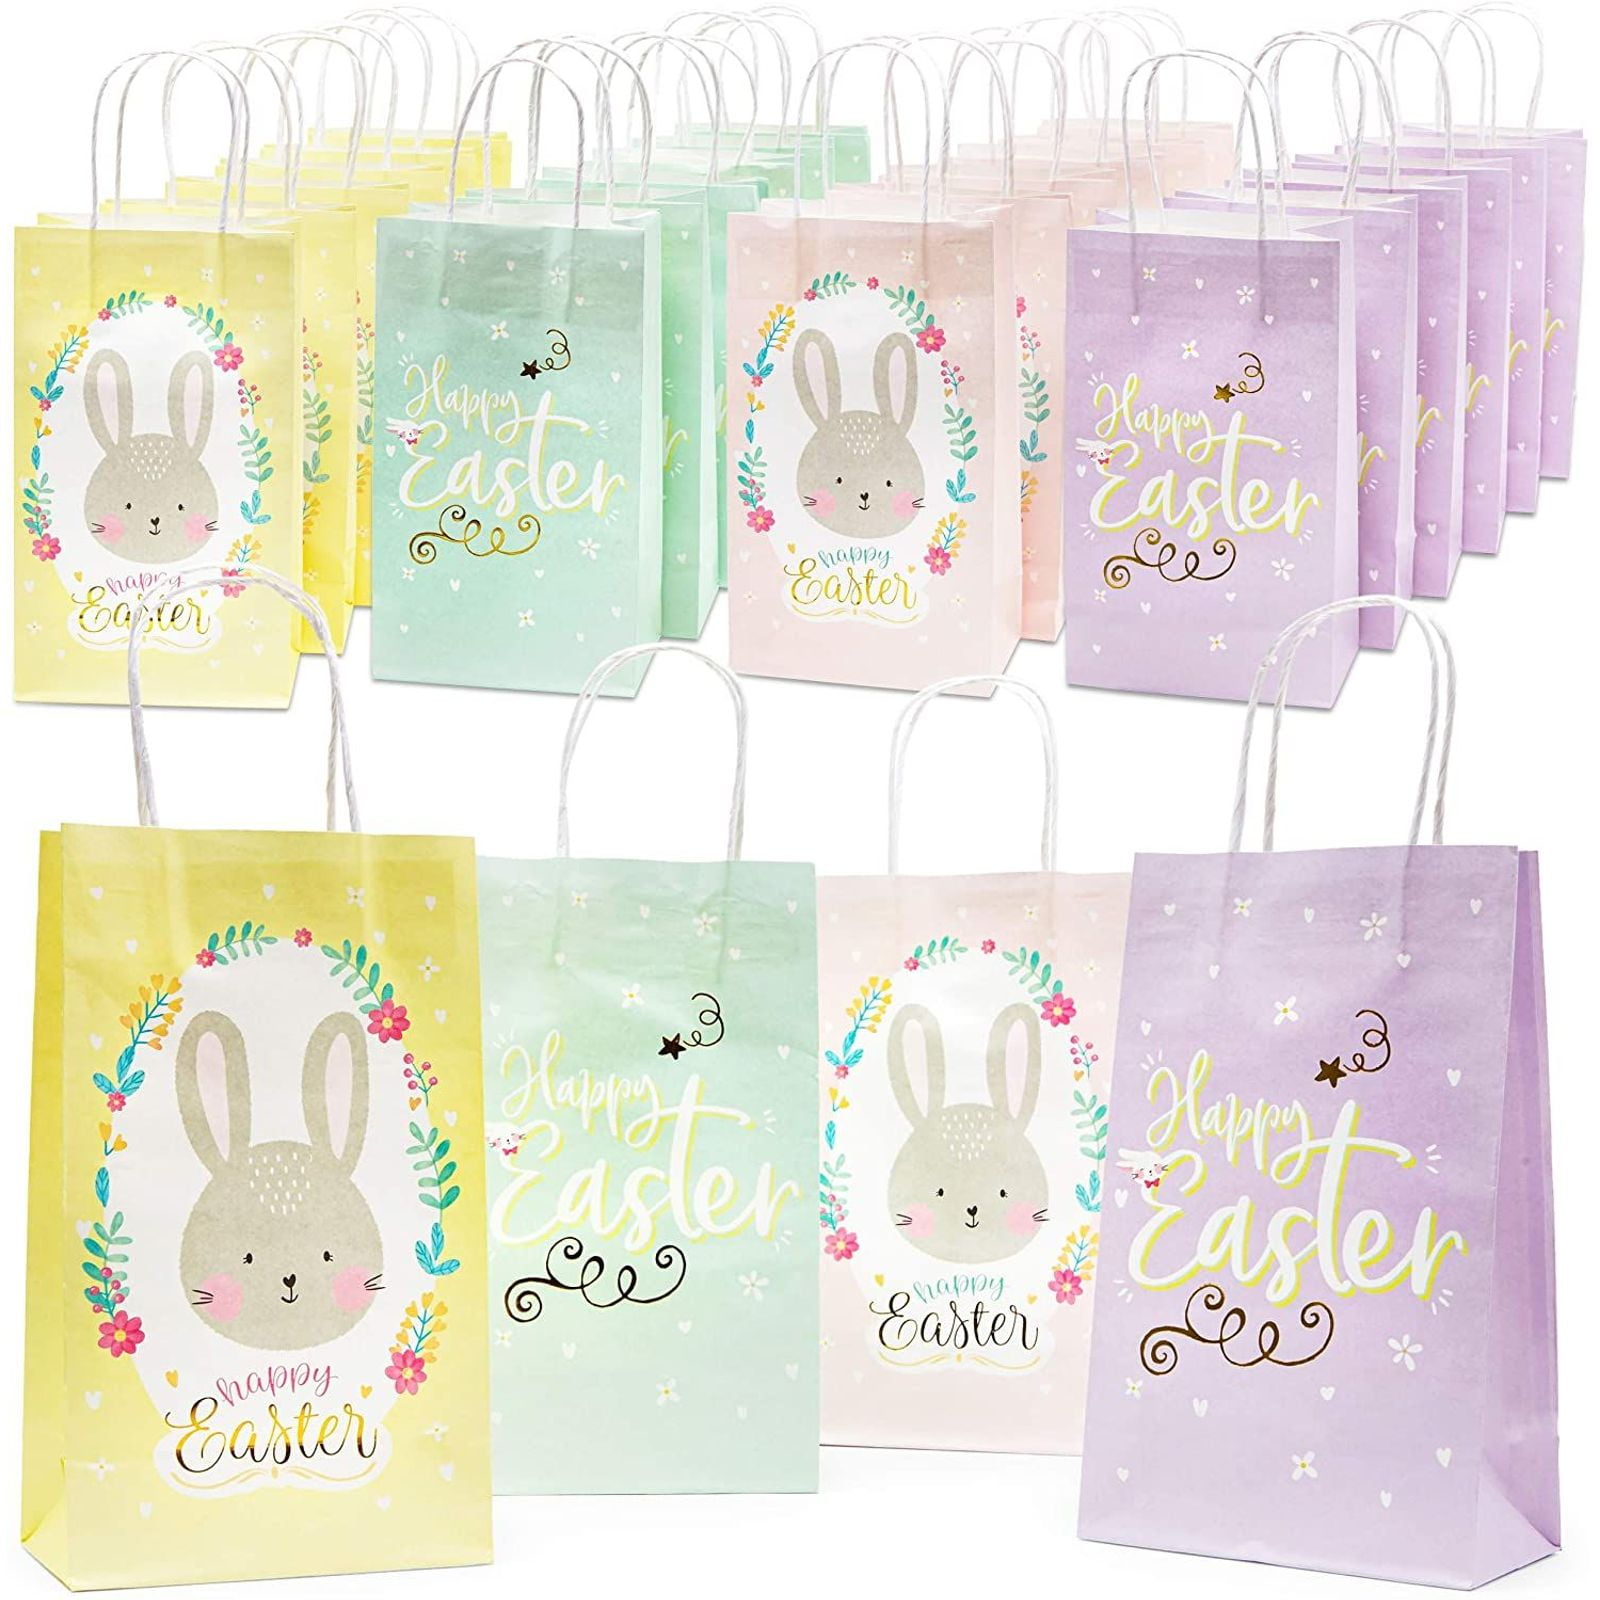 Easter bunny personalised gift bag rabbit hunt goodie sack  present 